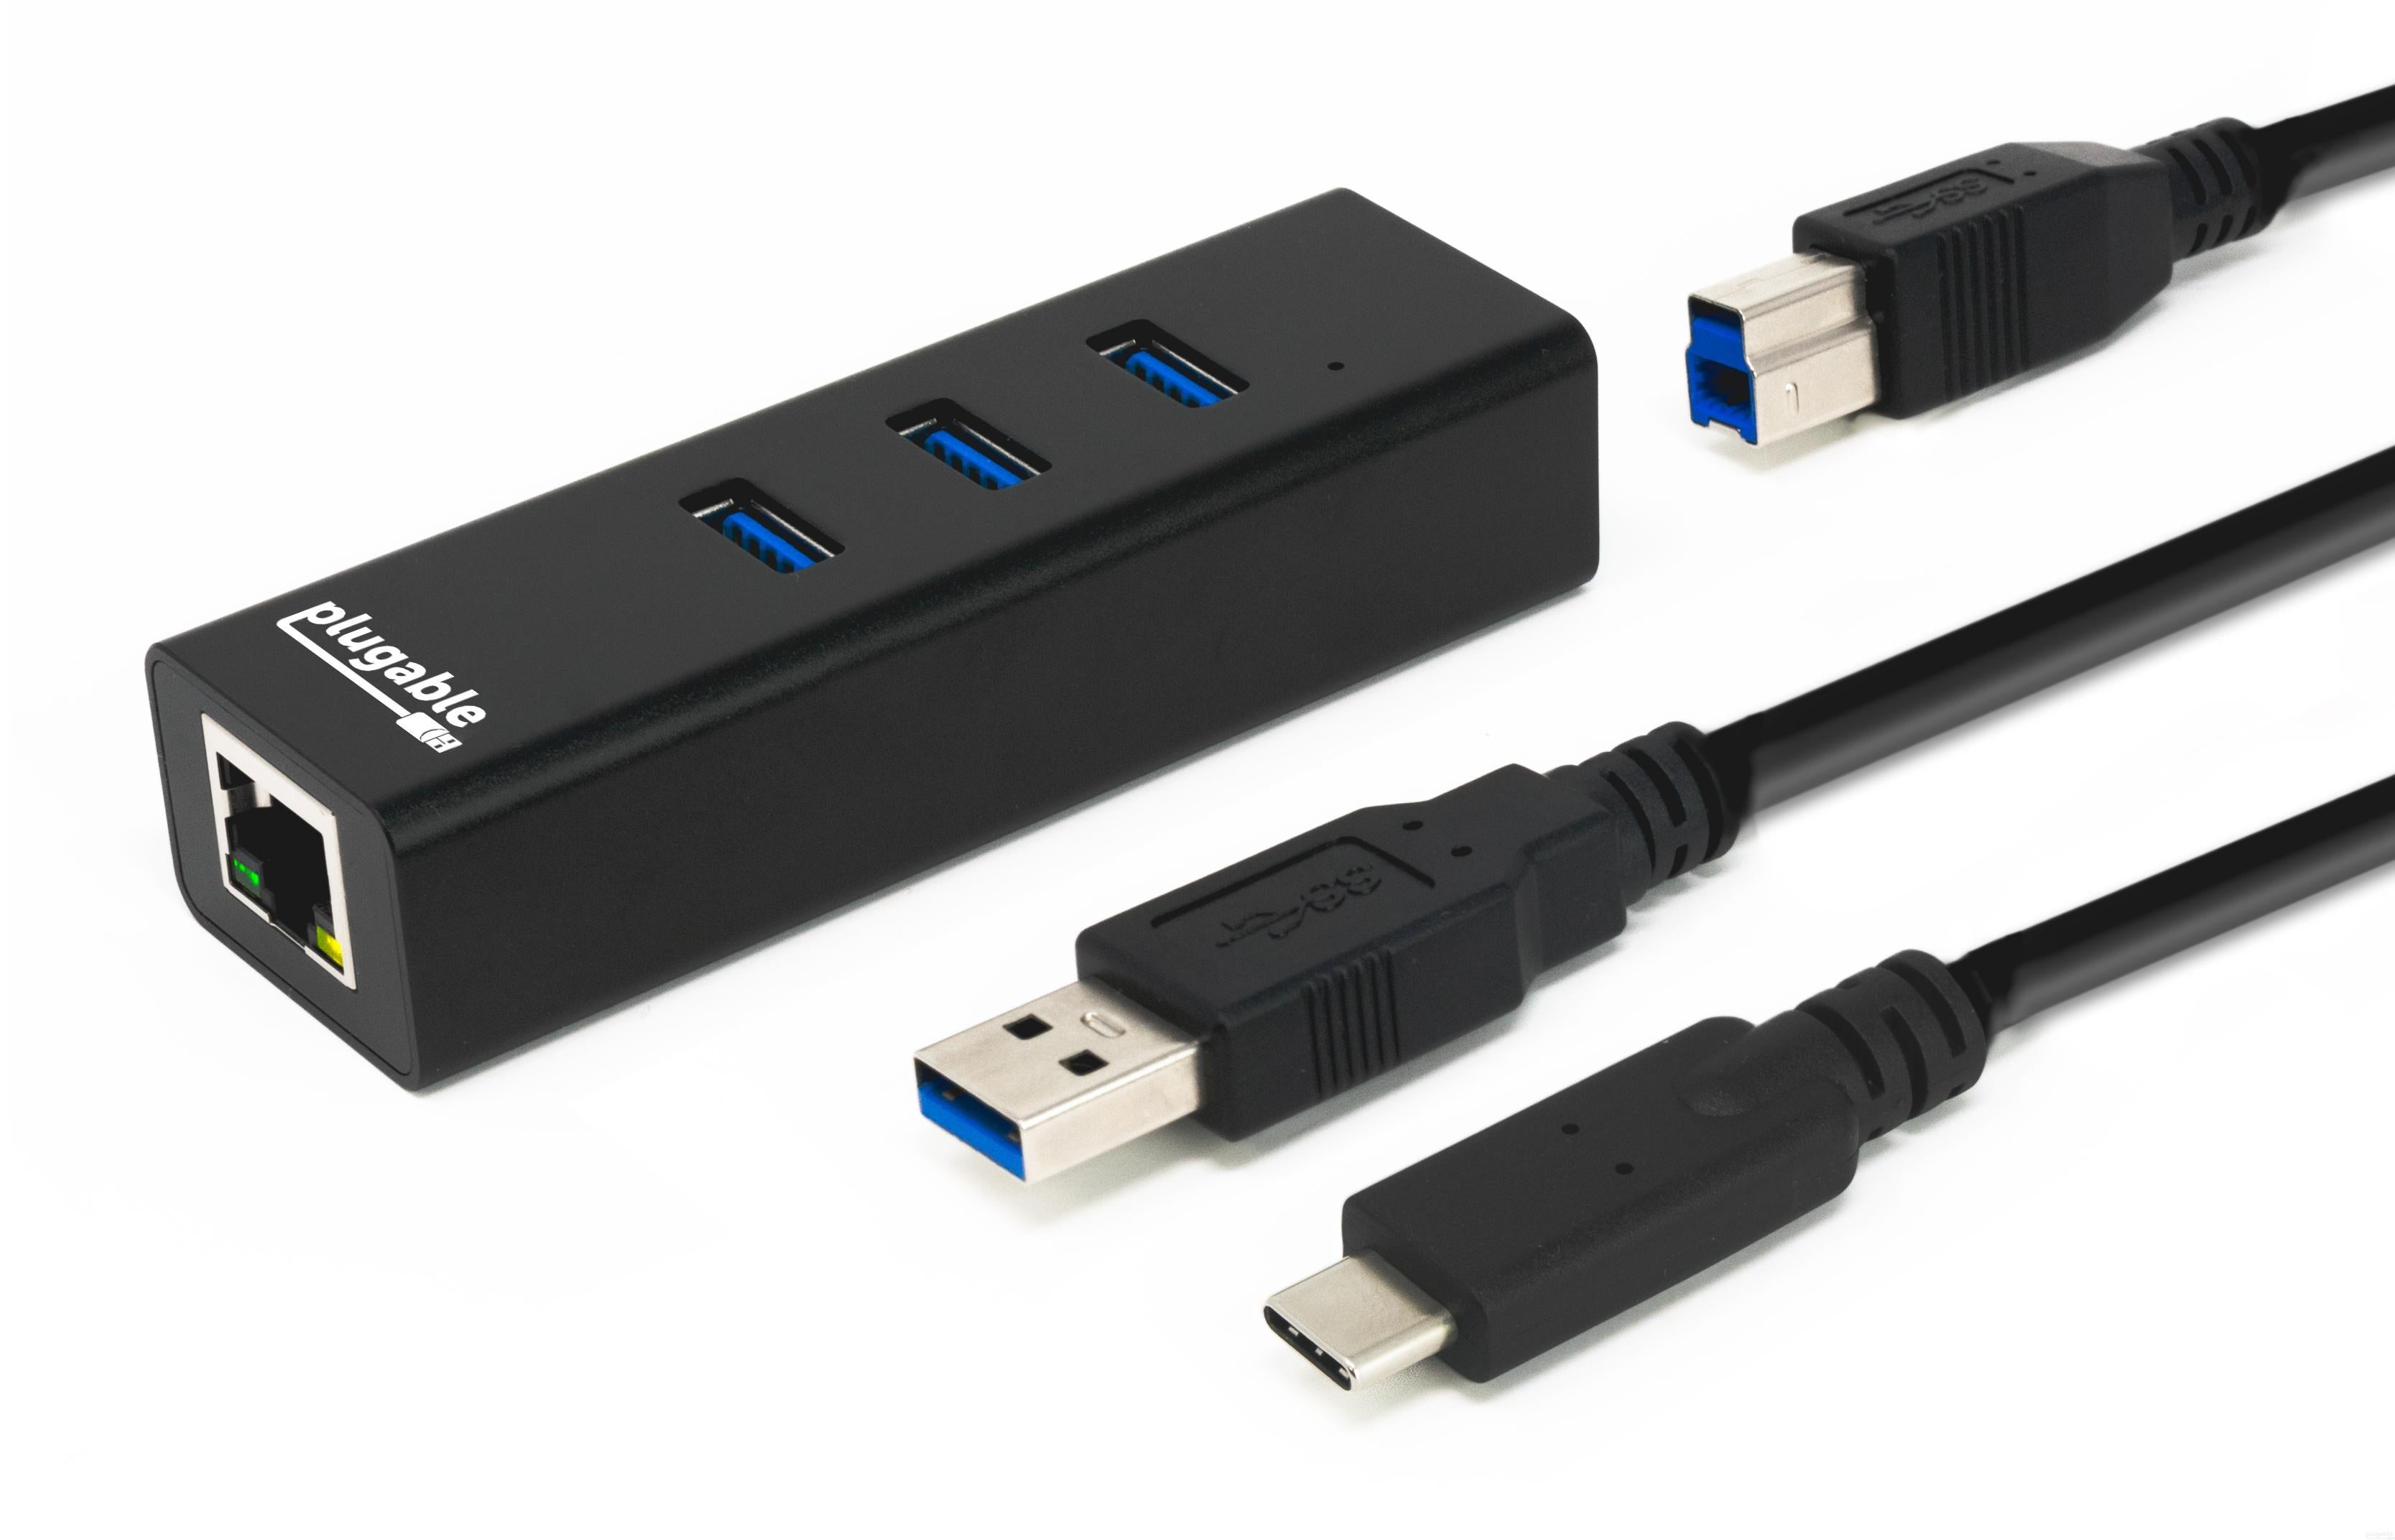 Plugable USB 3.0 3-Port Bus Powered with Gigabit Ethernet Technologies